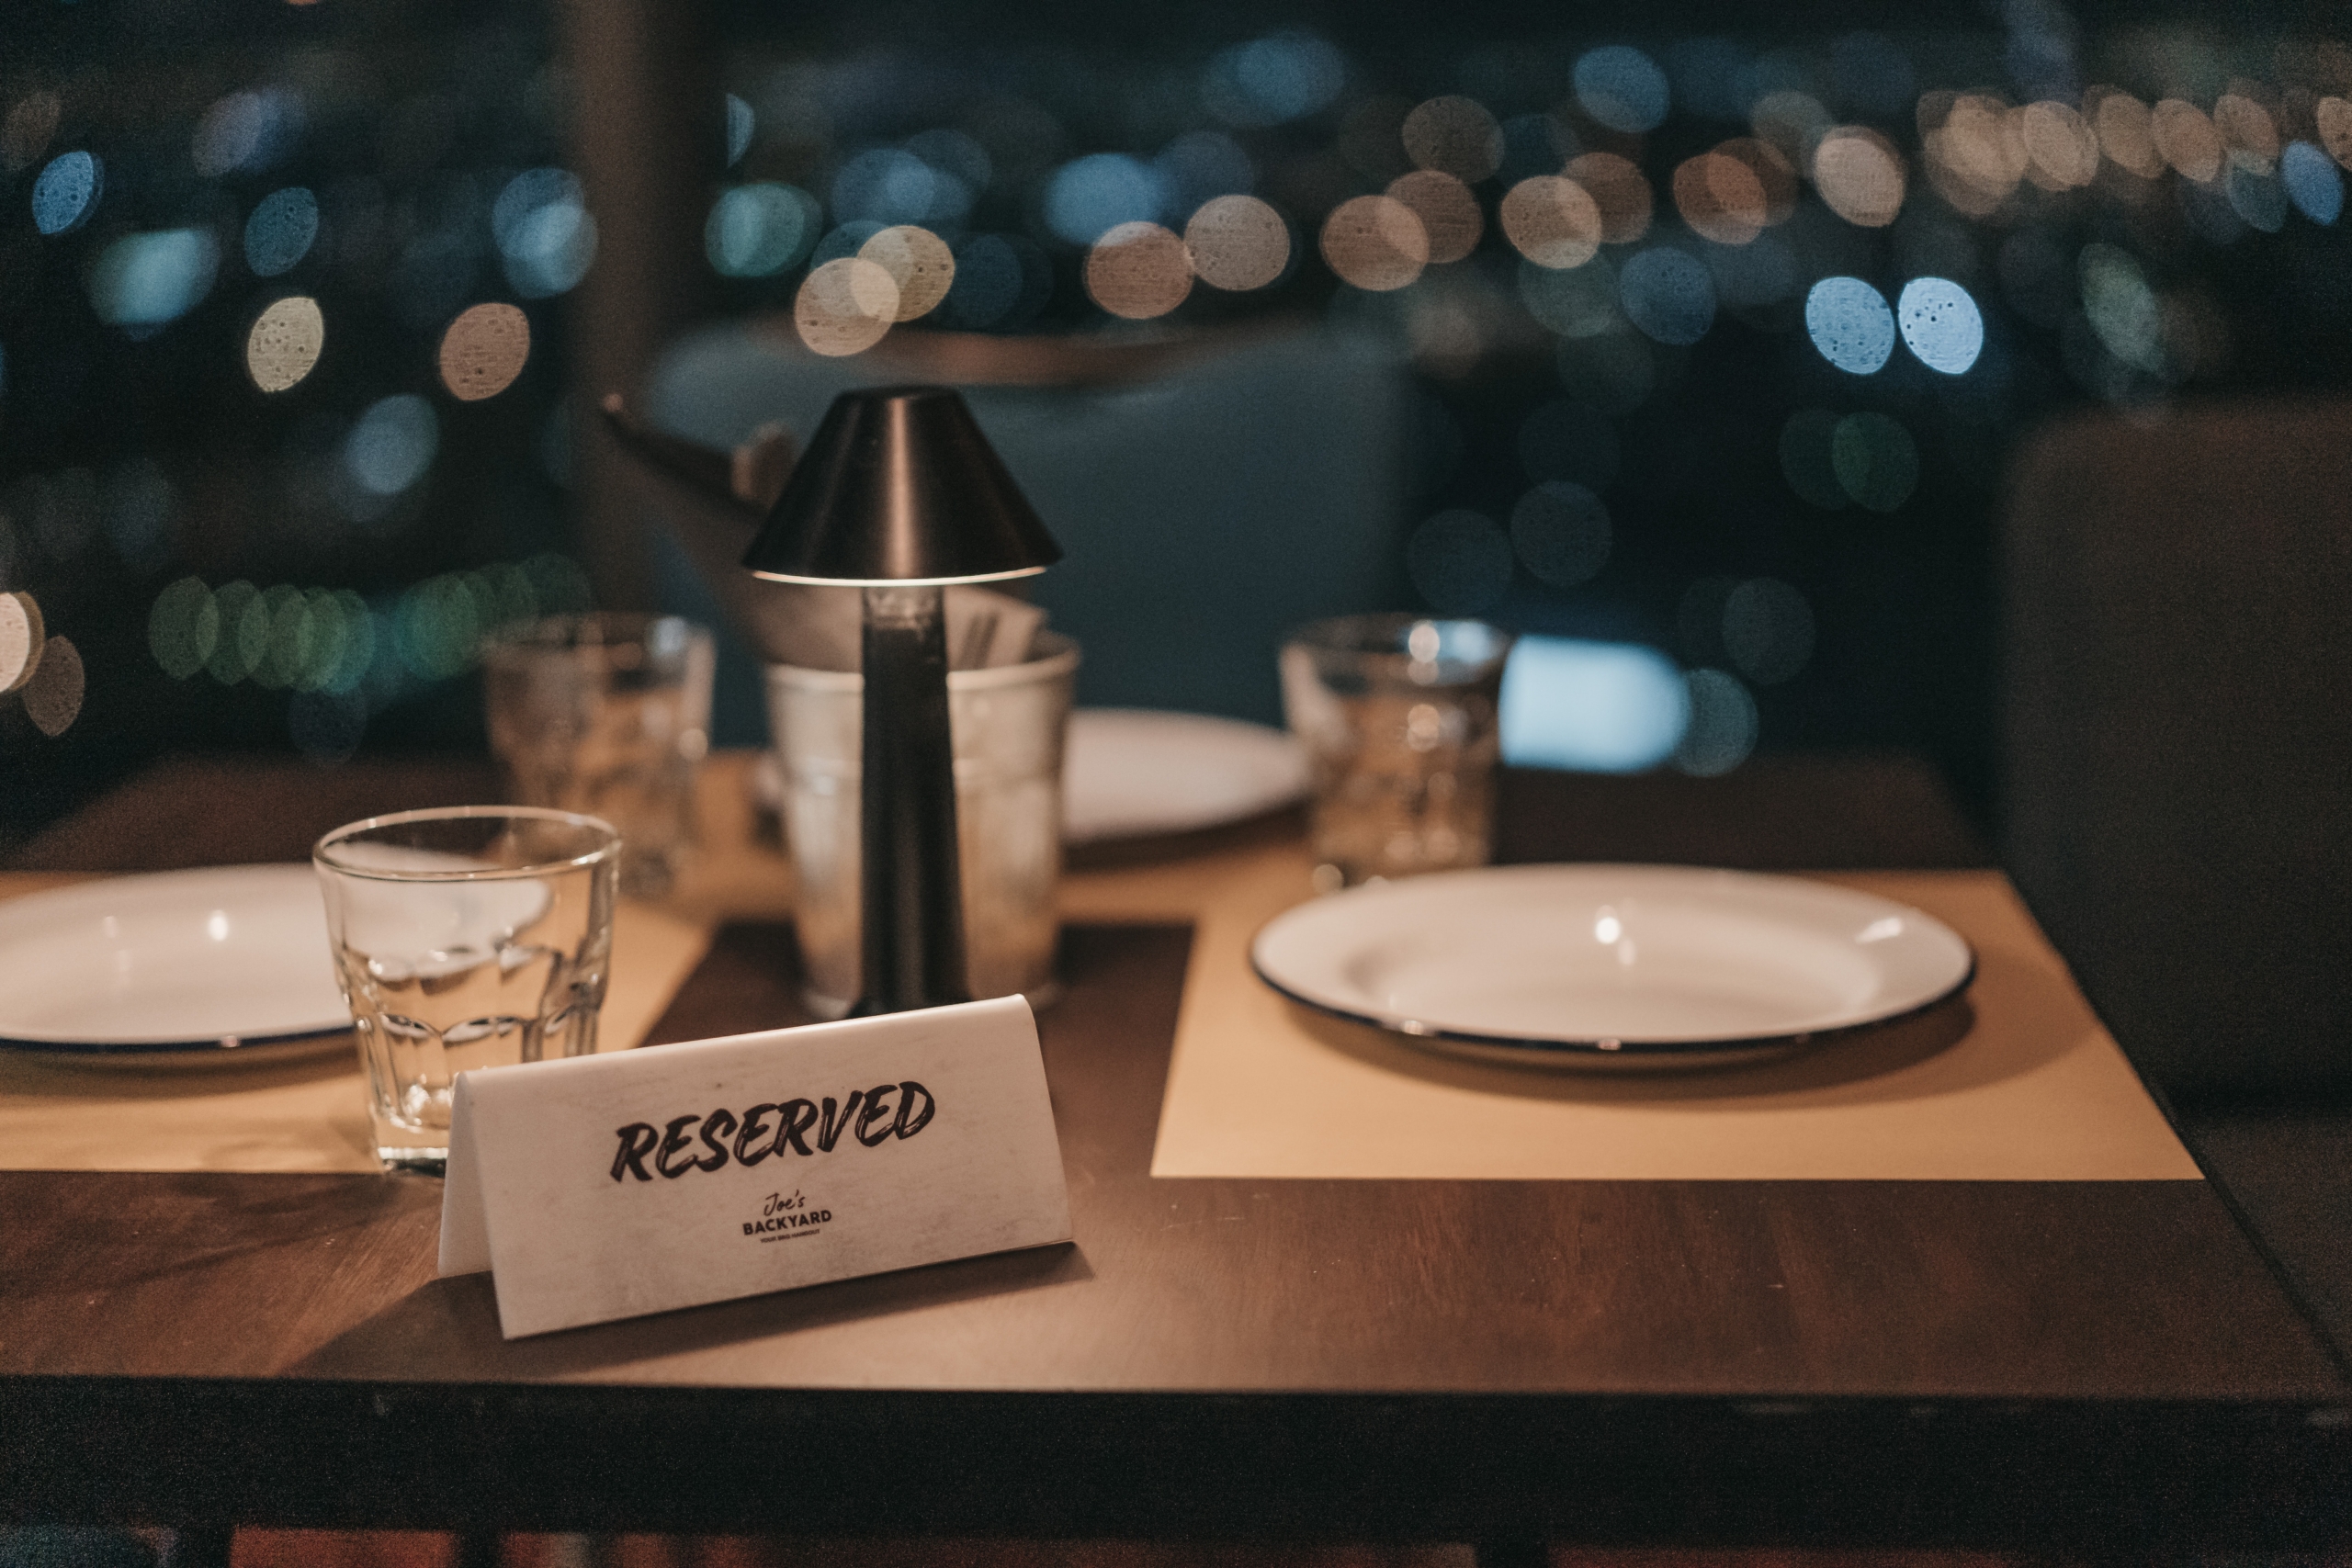 Reserved dinner table